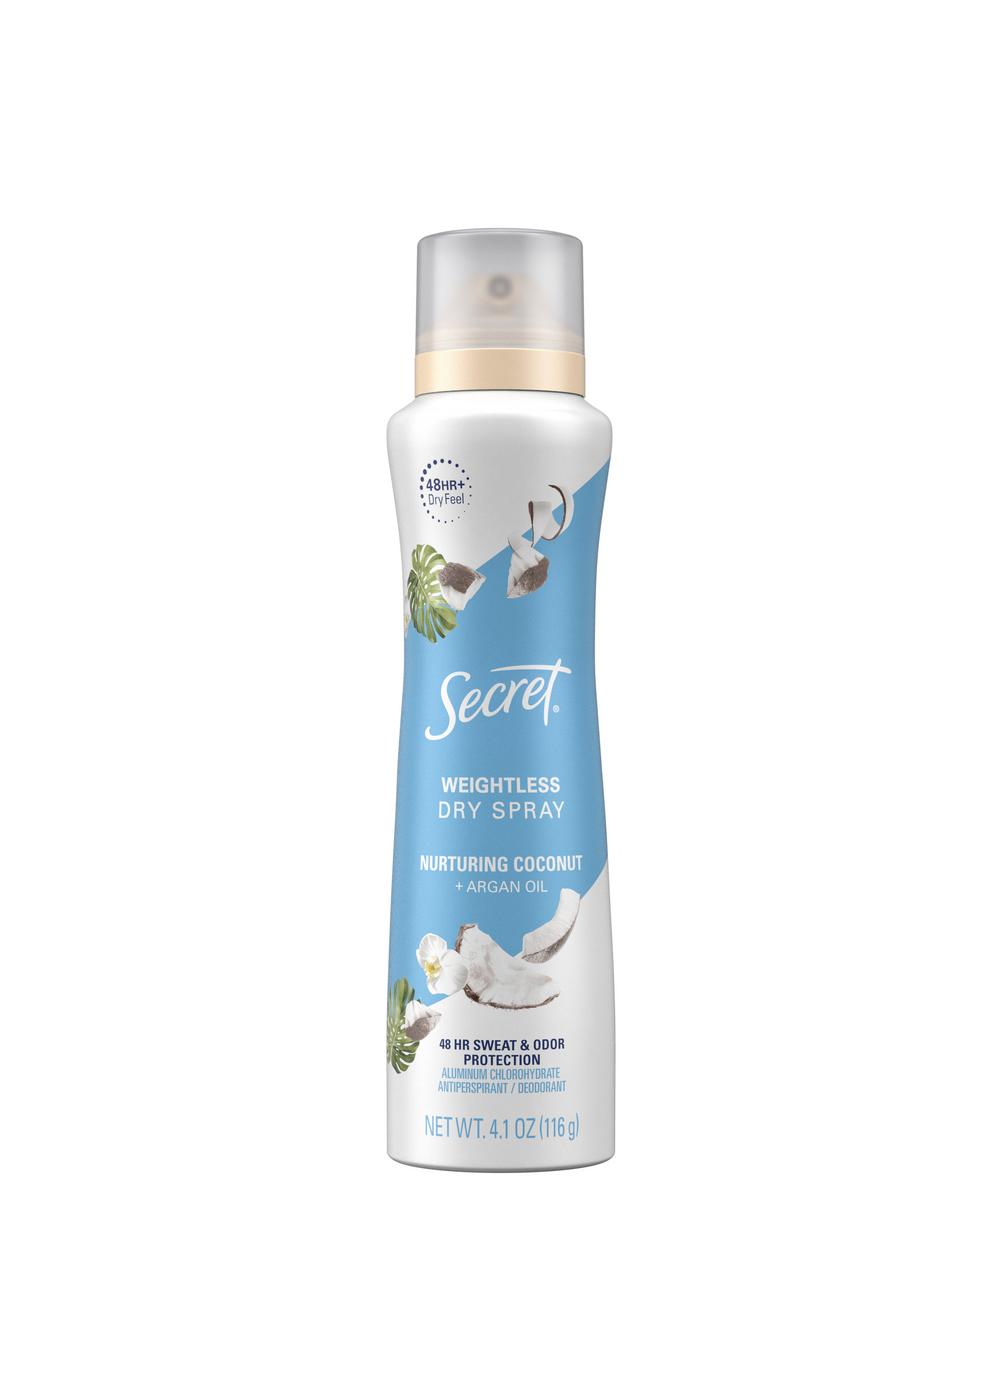 Secret Dry Spray Antiperspirant Deodorant - Nurturing Coconut & Argan Oil; image 1 of 8